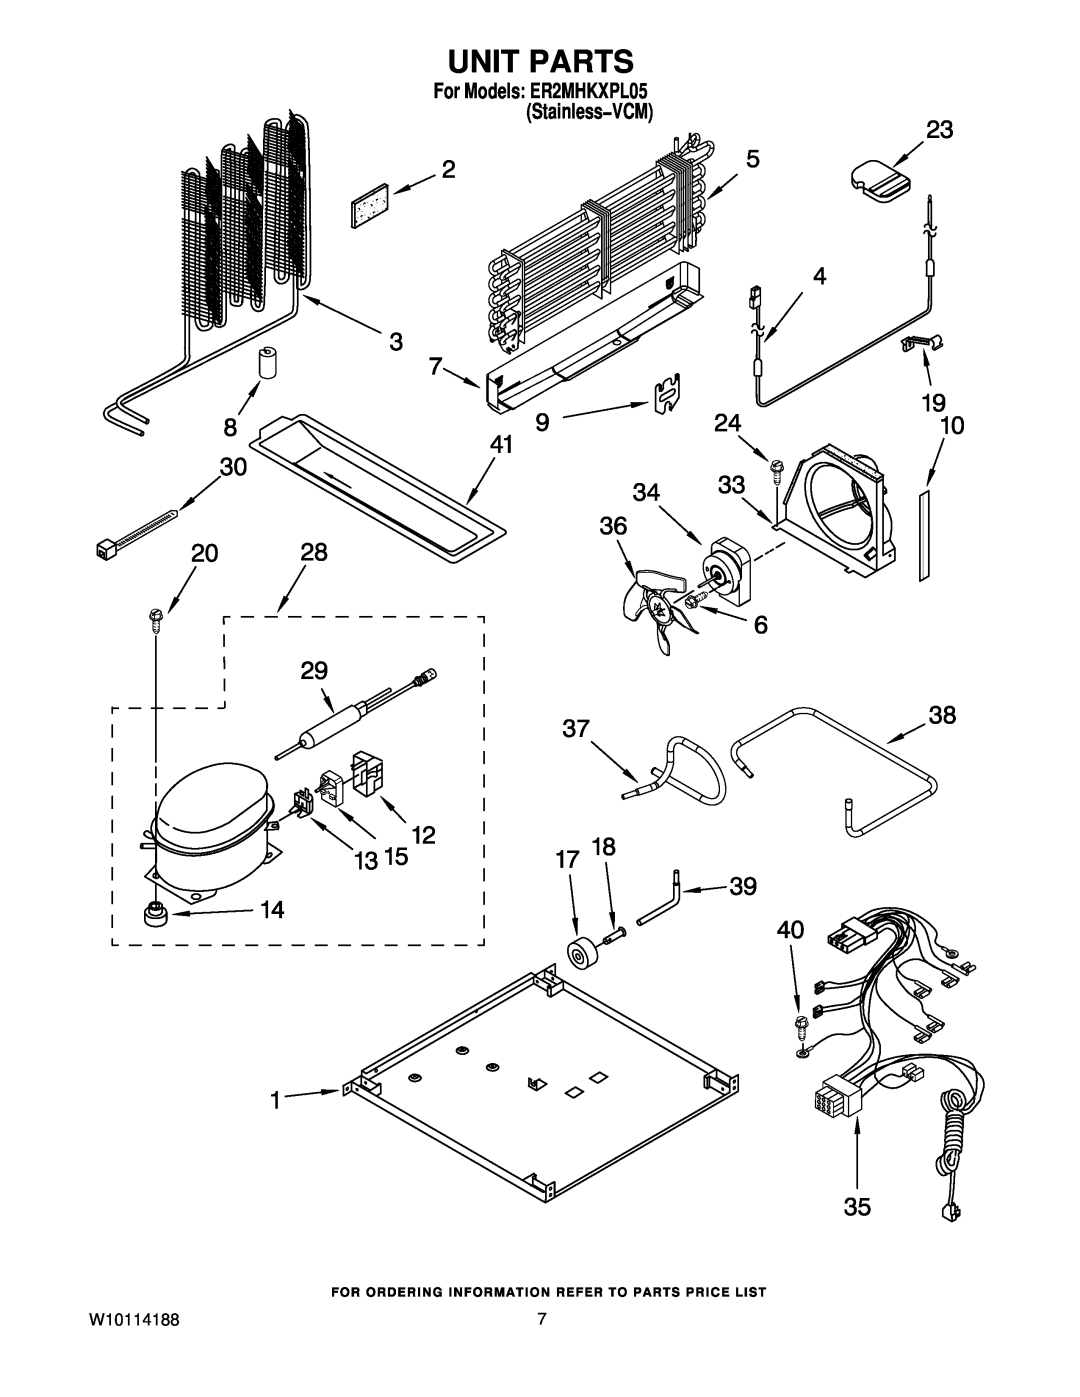 Whirlpool manual Unit Parts, W10114188, For Models ER2MHKXPL05 Stainless−VCM 